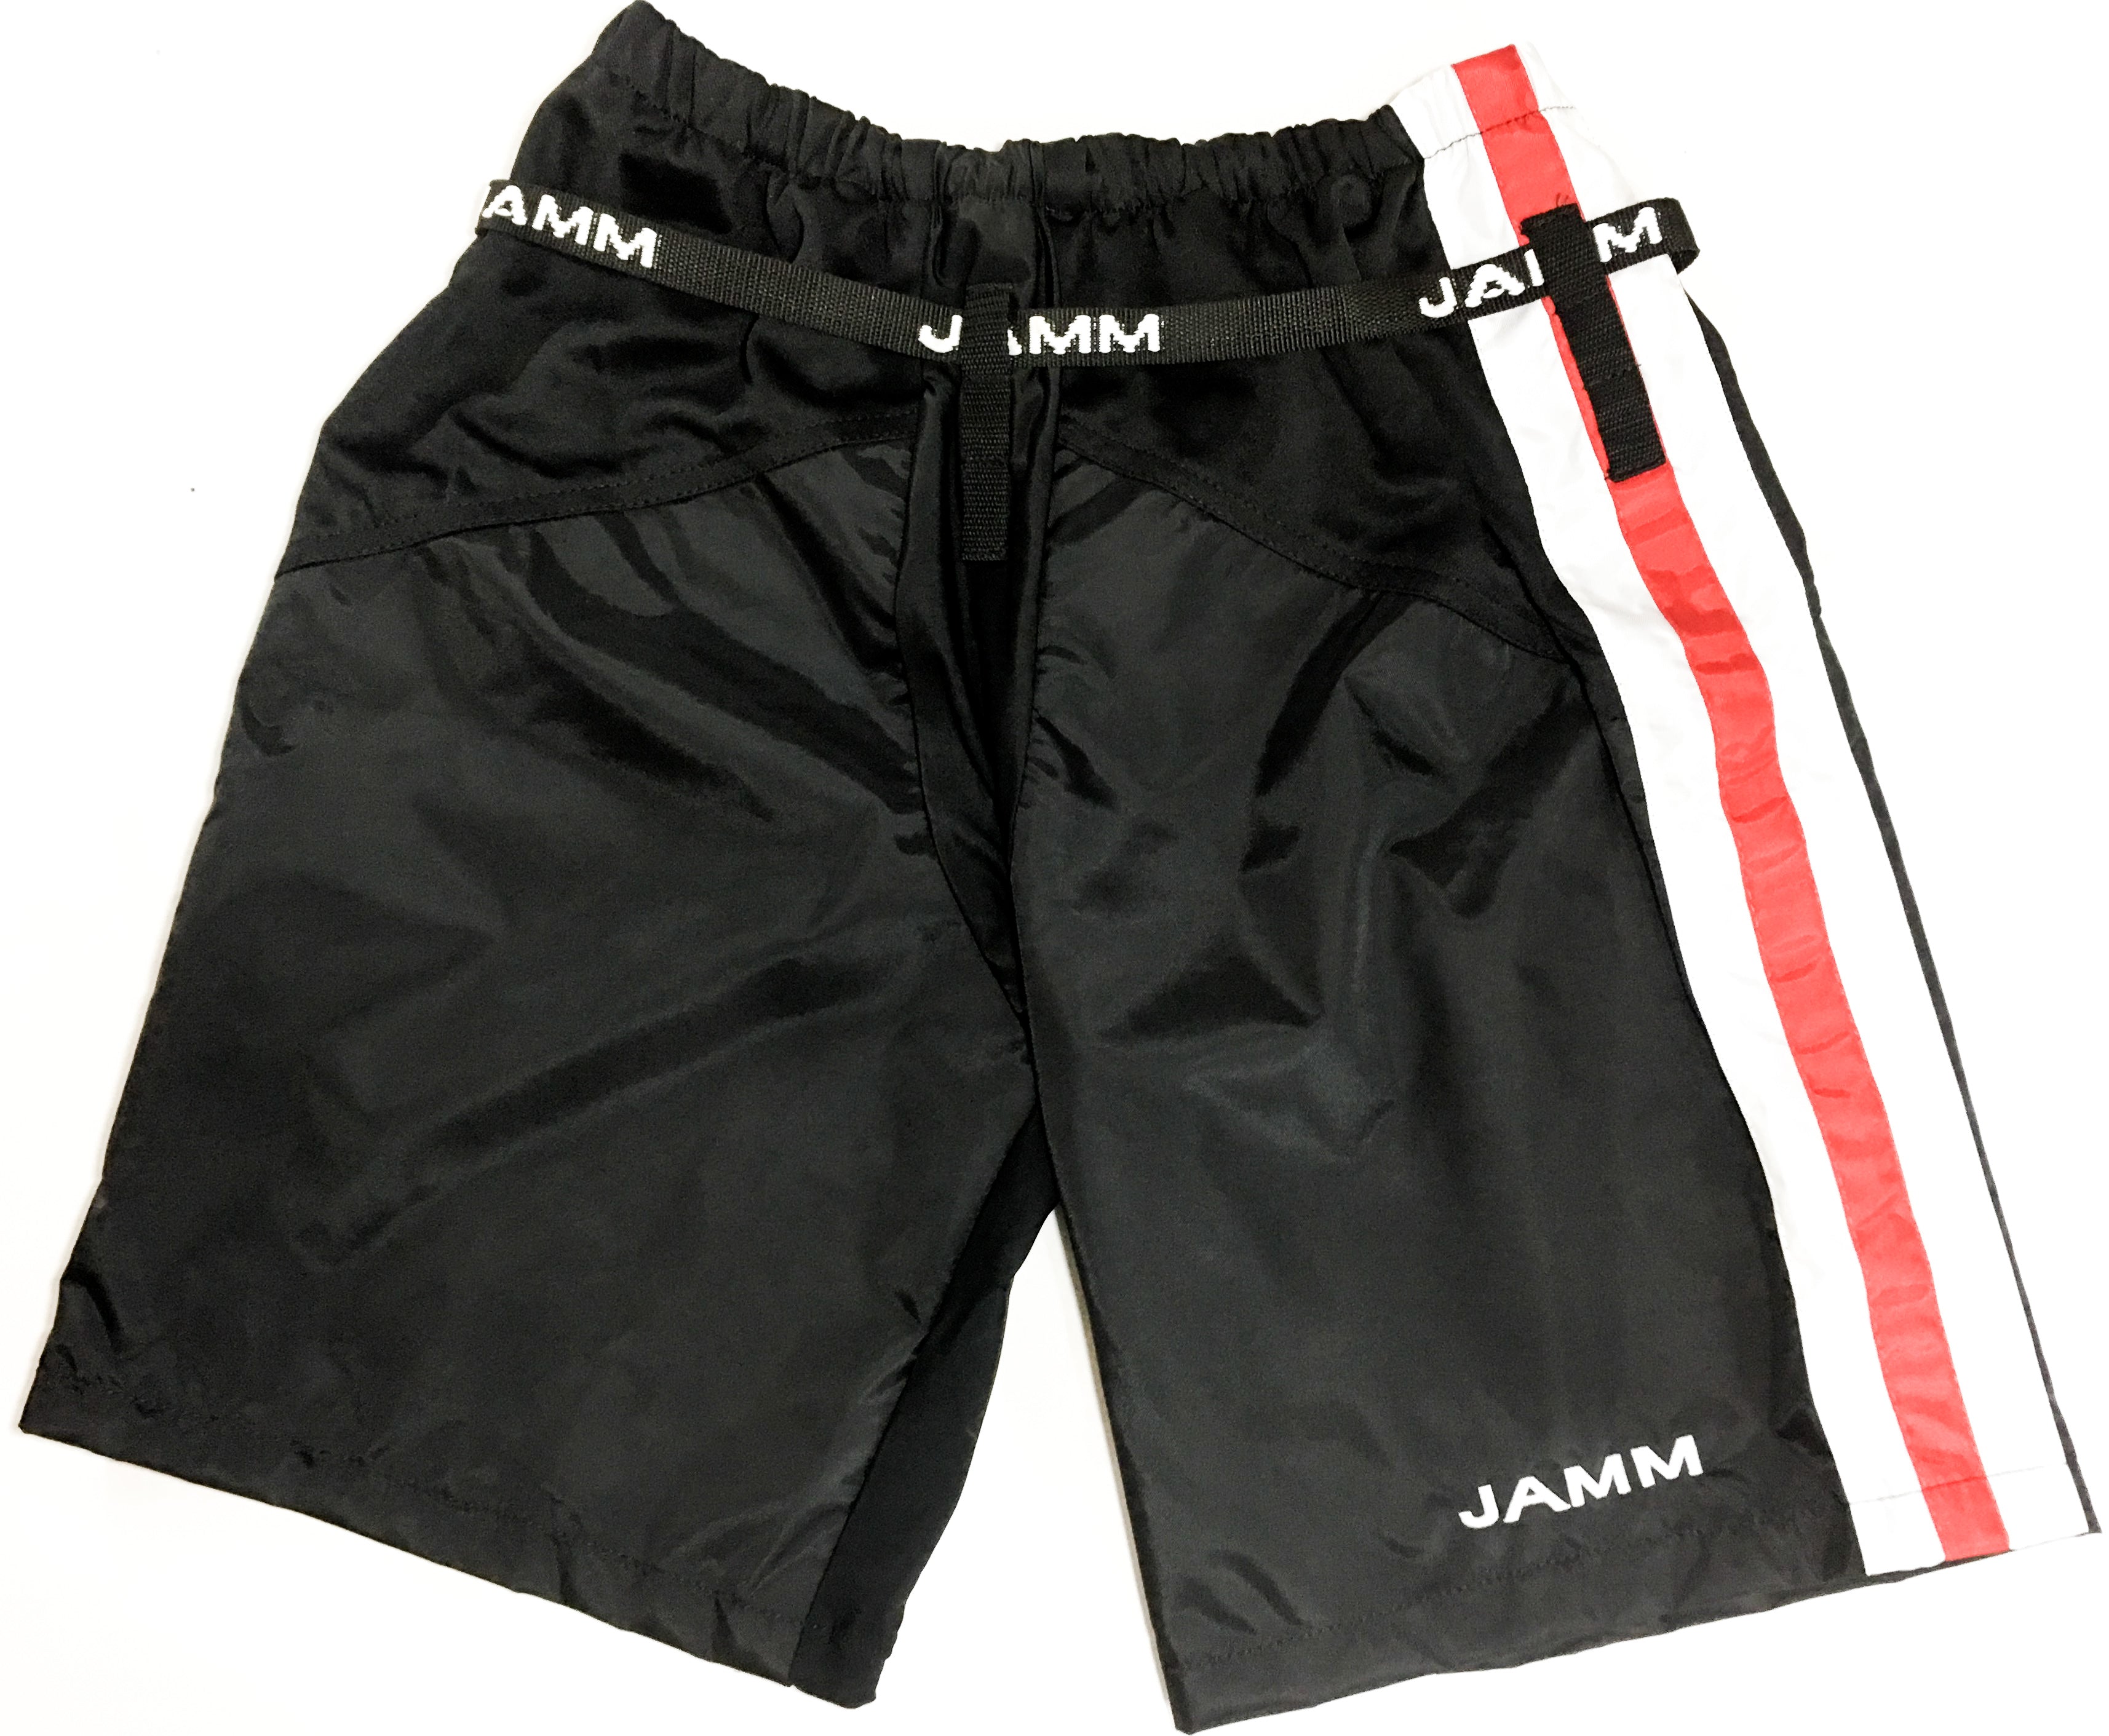  JAMM J60 Hockey Core/Girdle Shell (Black, JR M) : Sports &  Outdoors